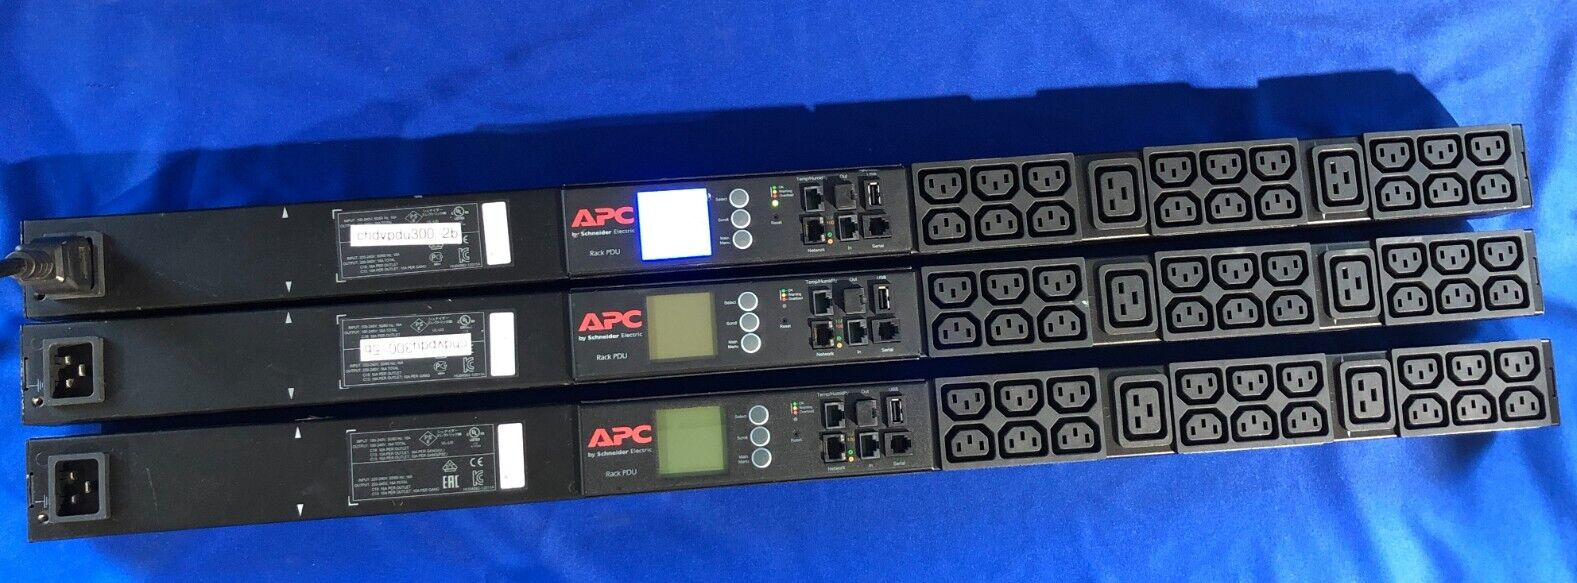 Lot: 3x APC Rack PDU Power Distribution AP8858 - Partially Tested - Read Desc.